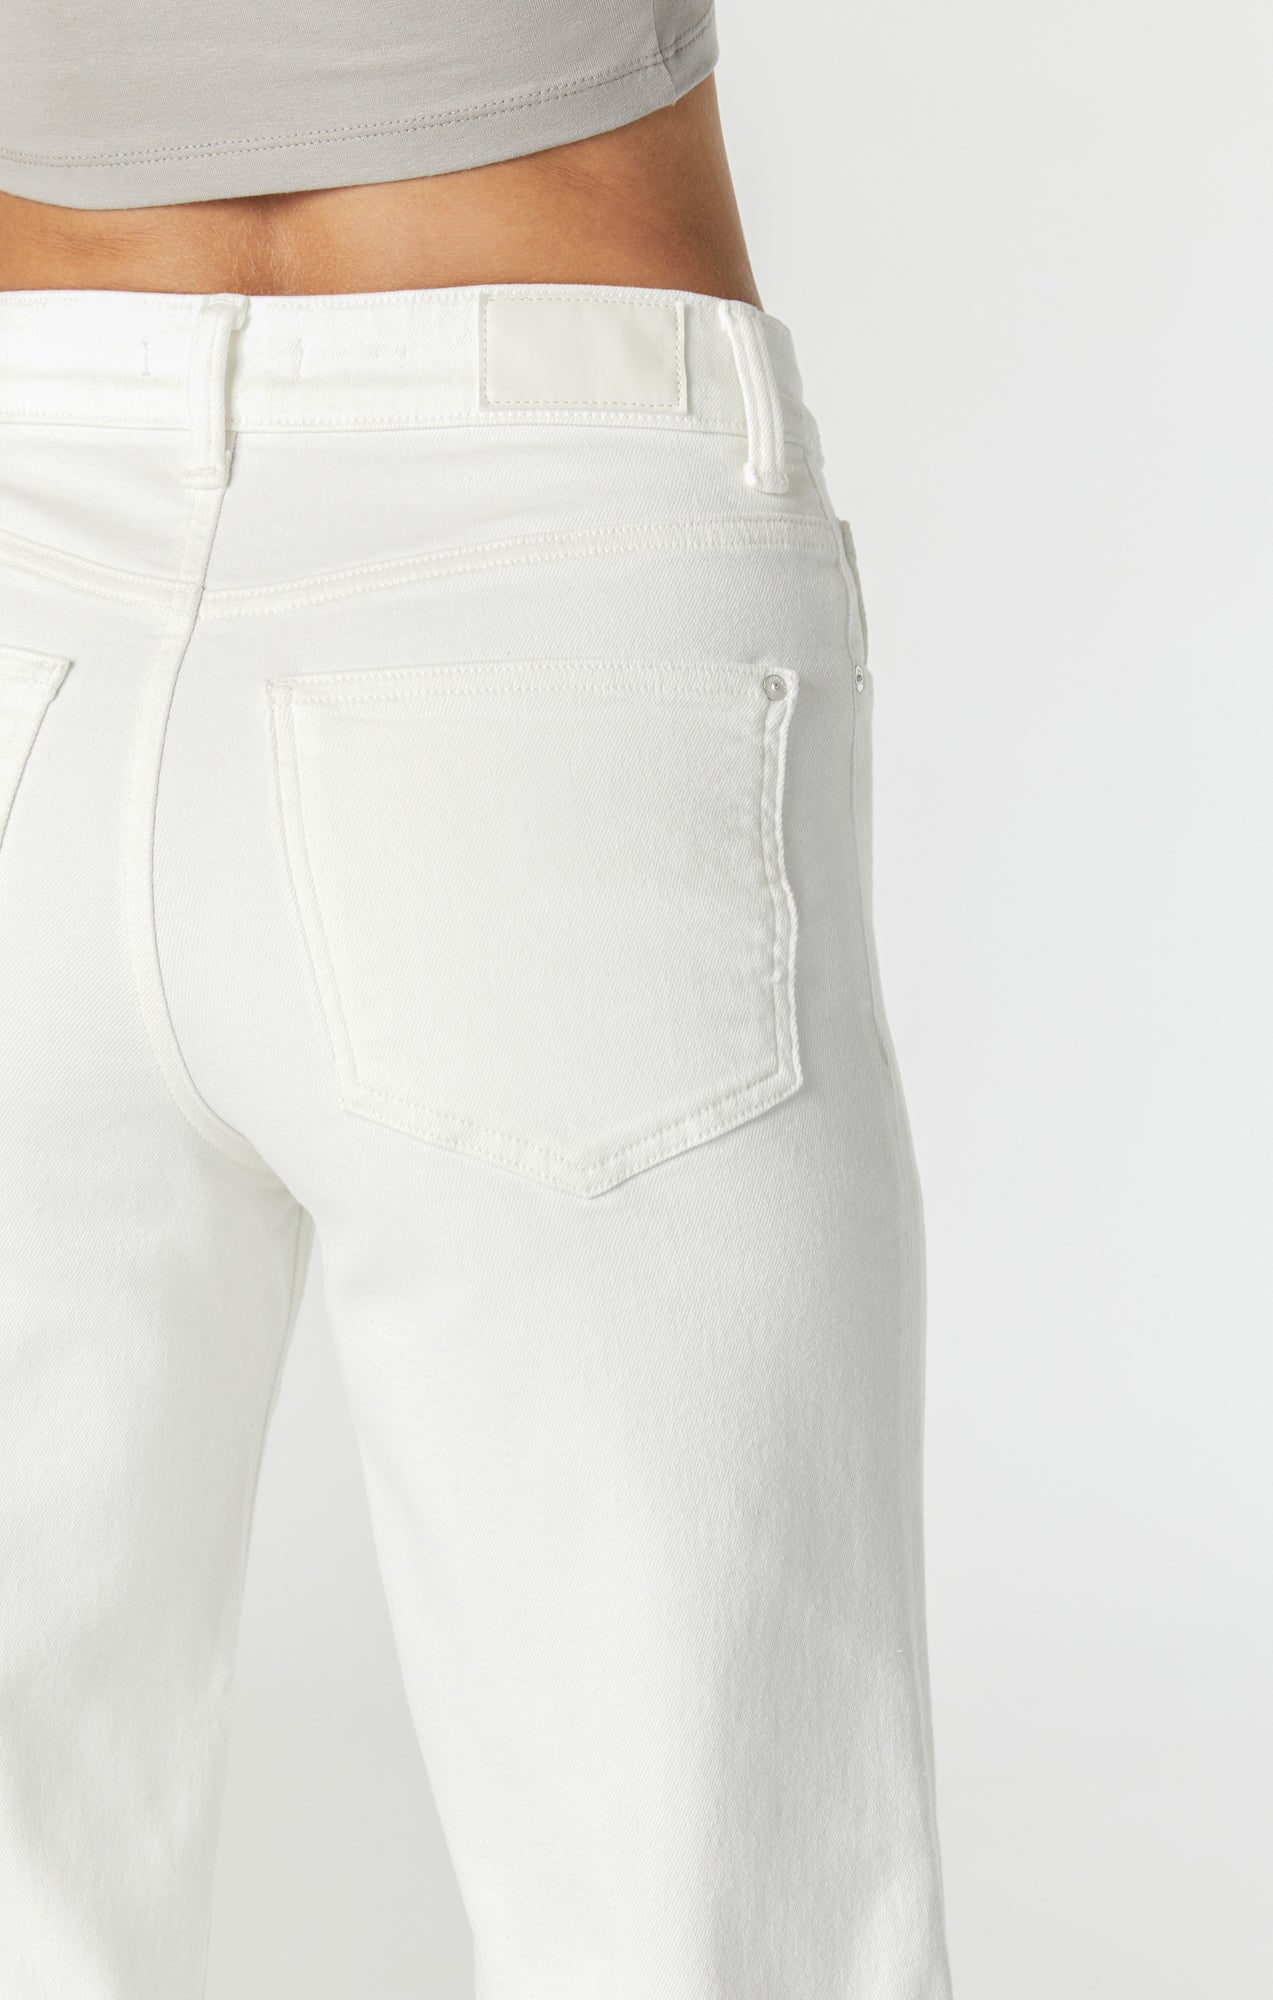 Paloma White Jeans